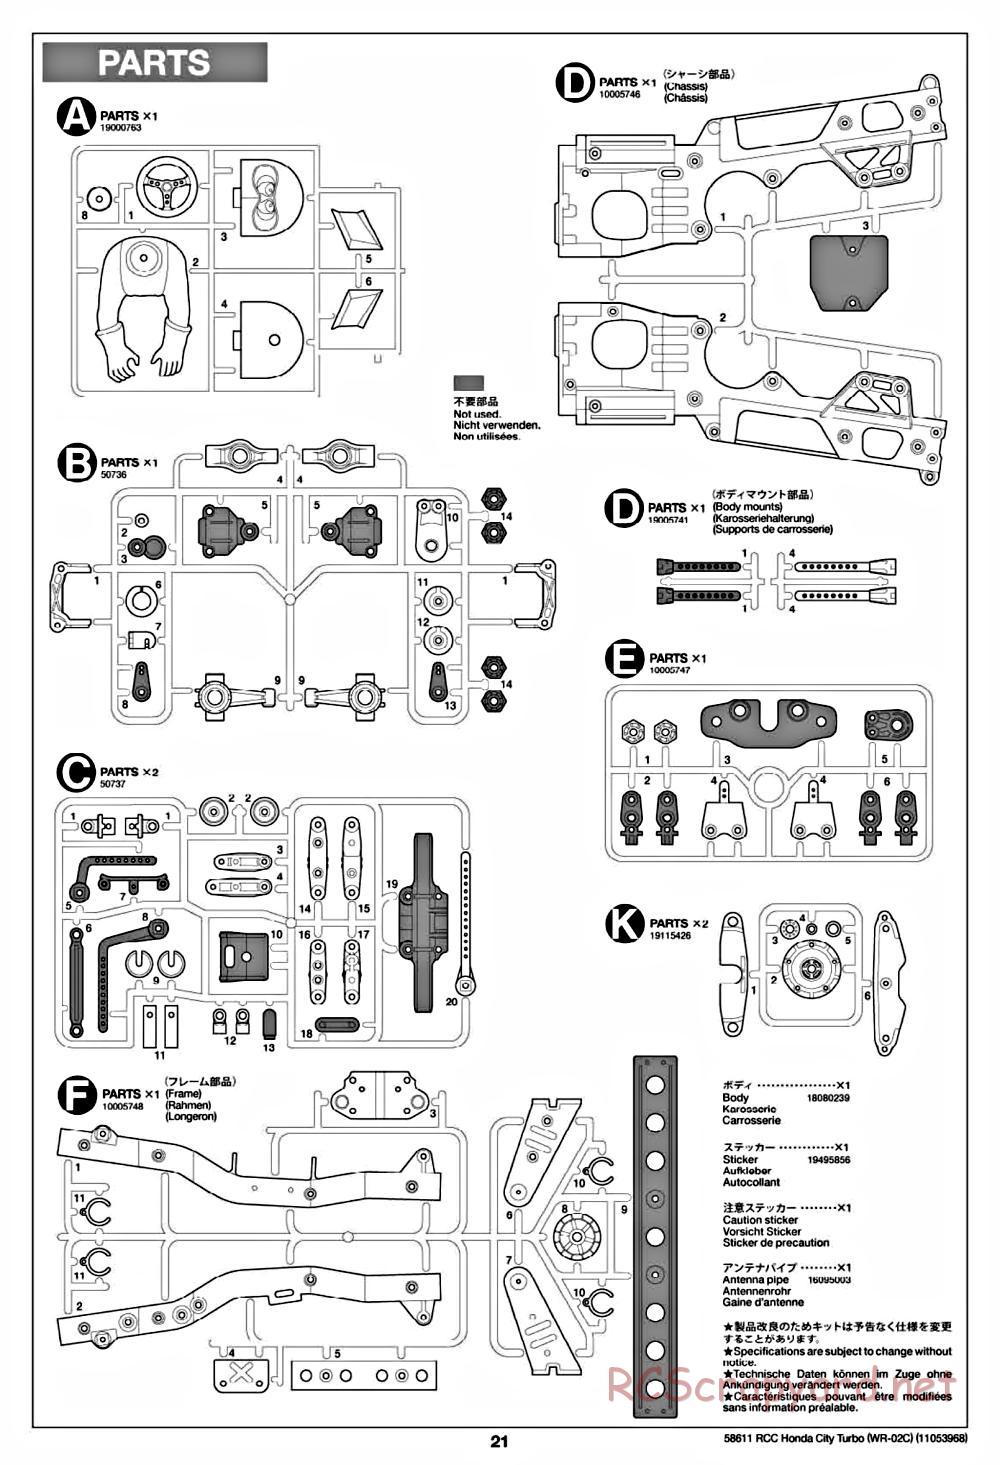 Tamiya - WR-02C Chassis - Manual - Page 21